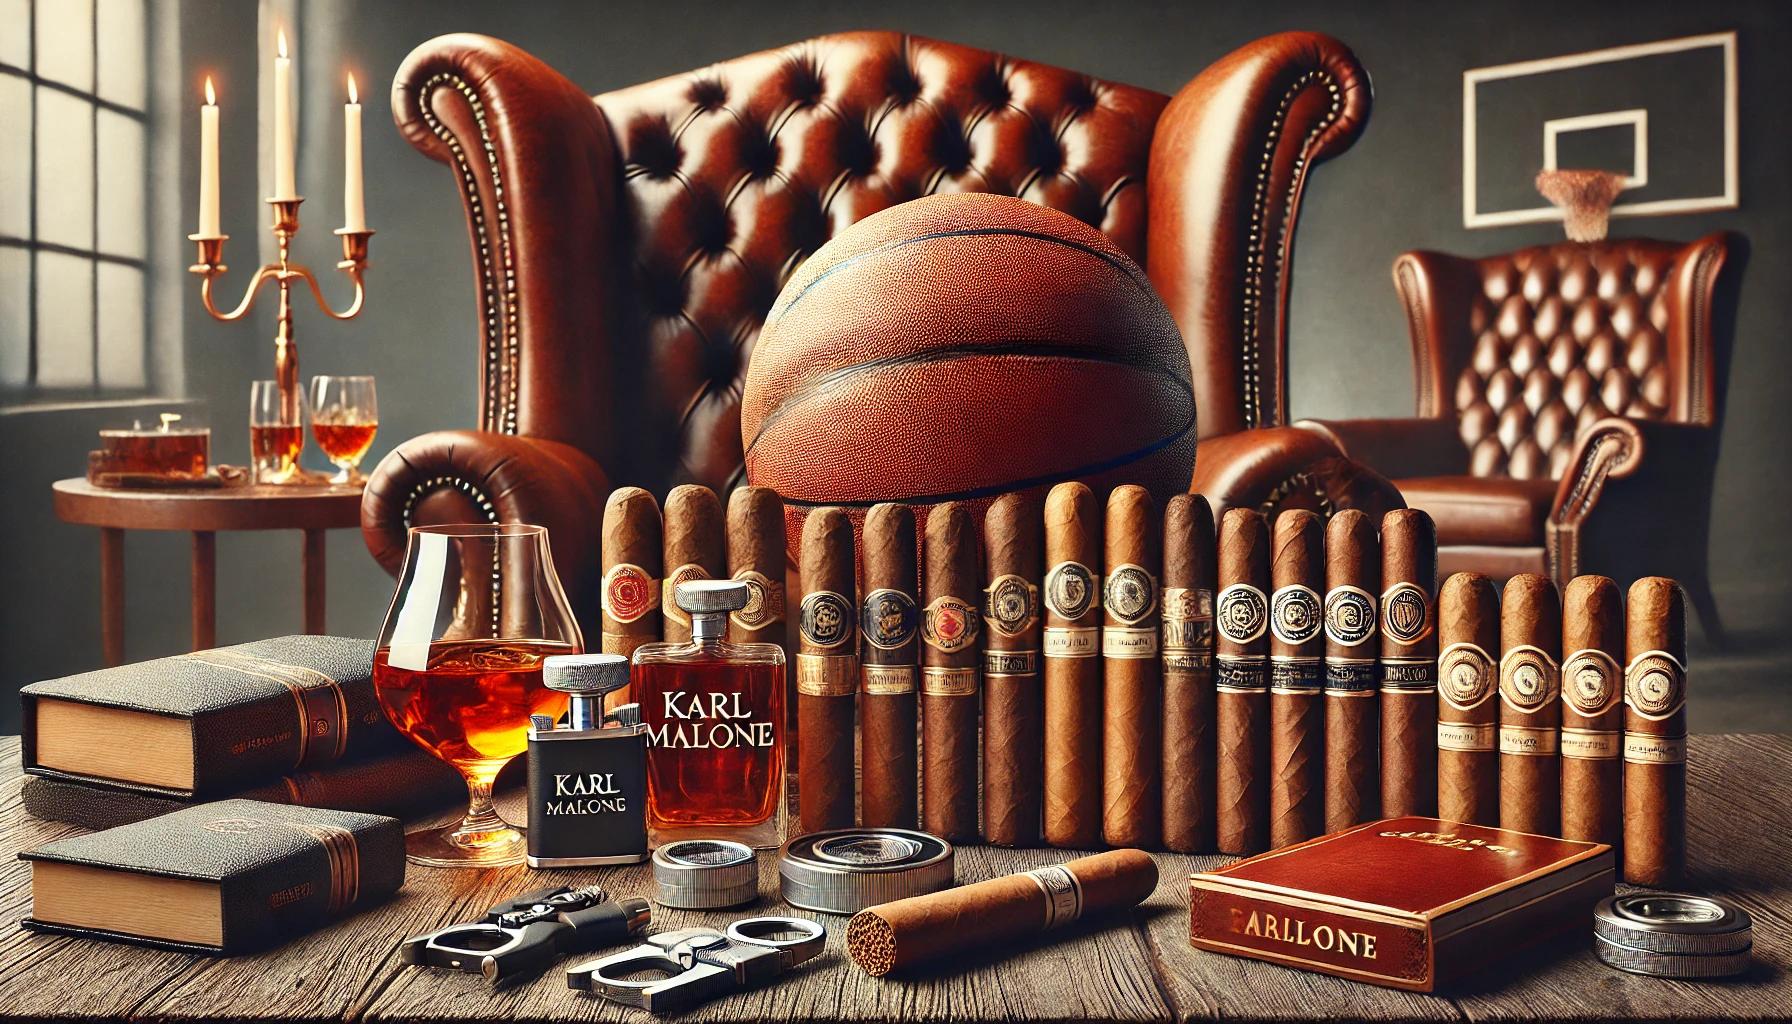 What Cigars Does Karl Malone Smoke